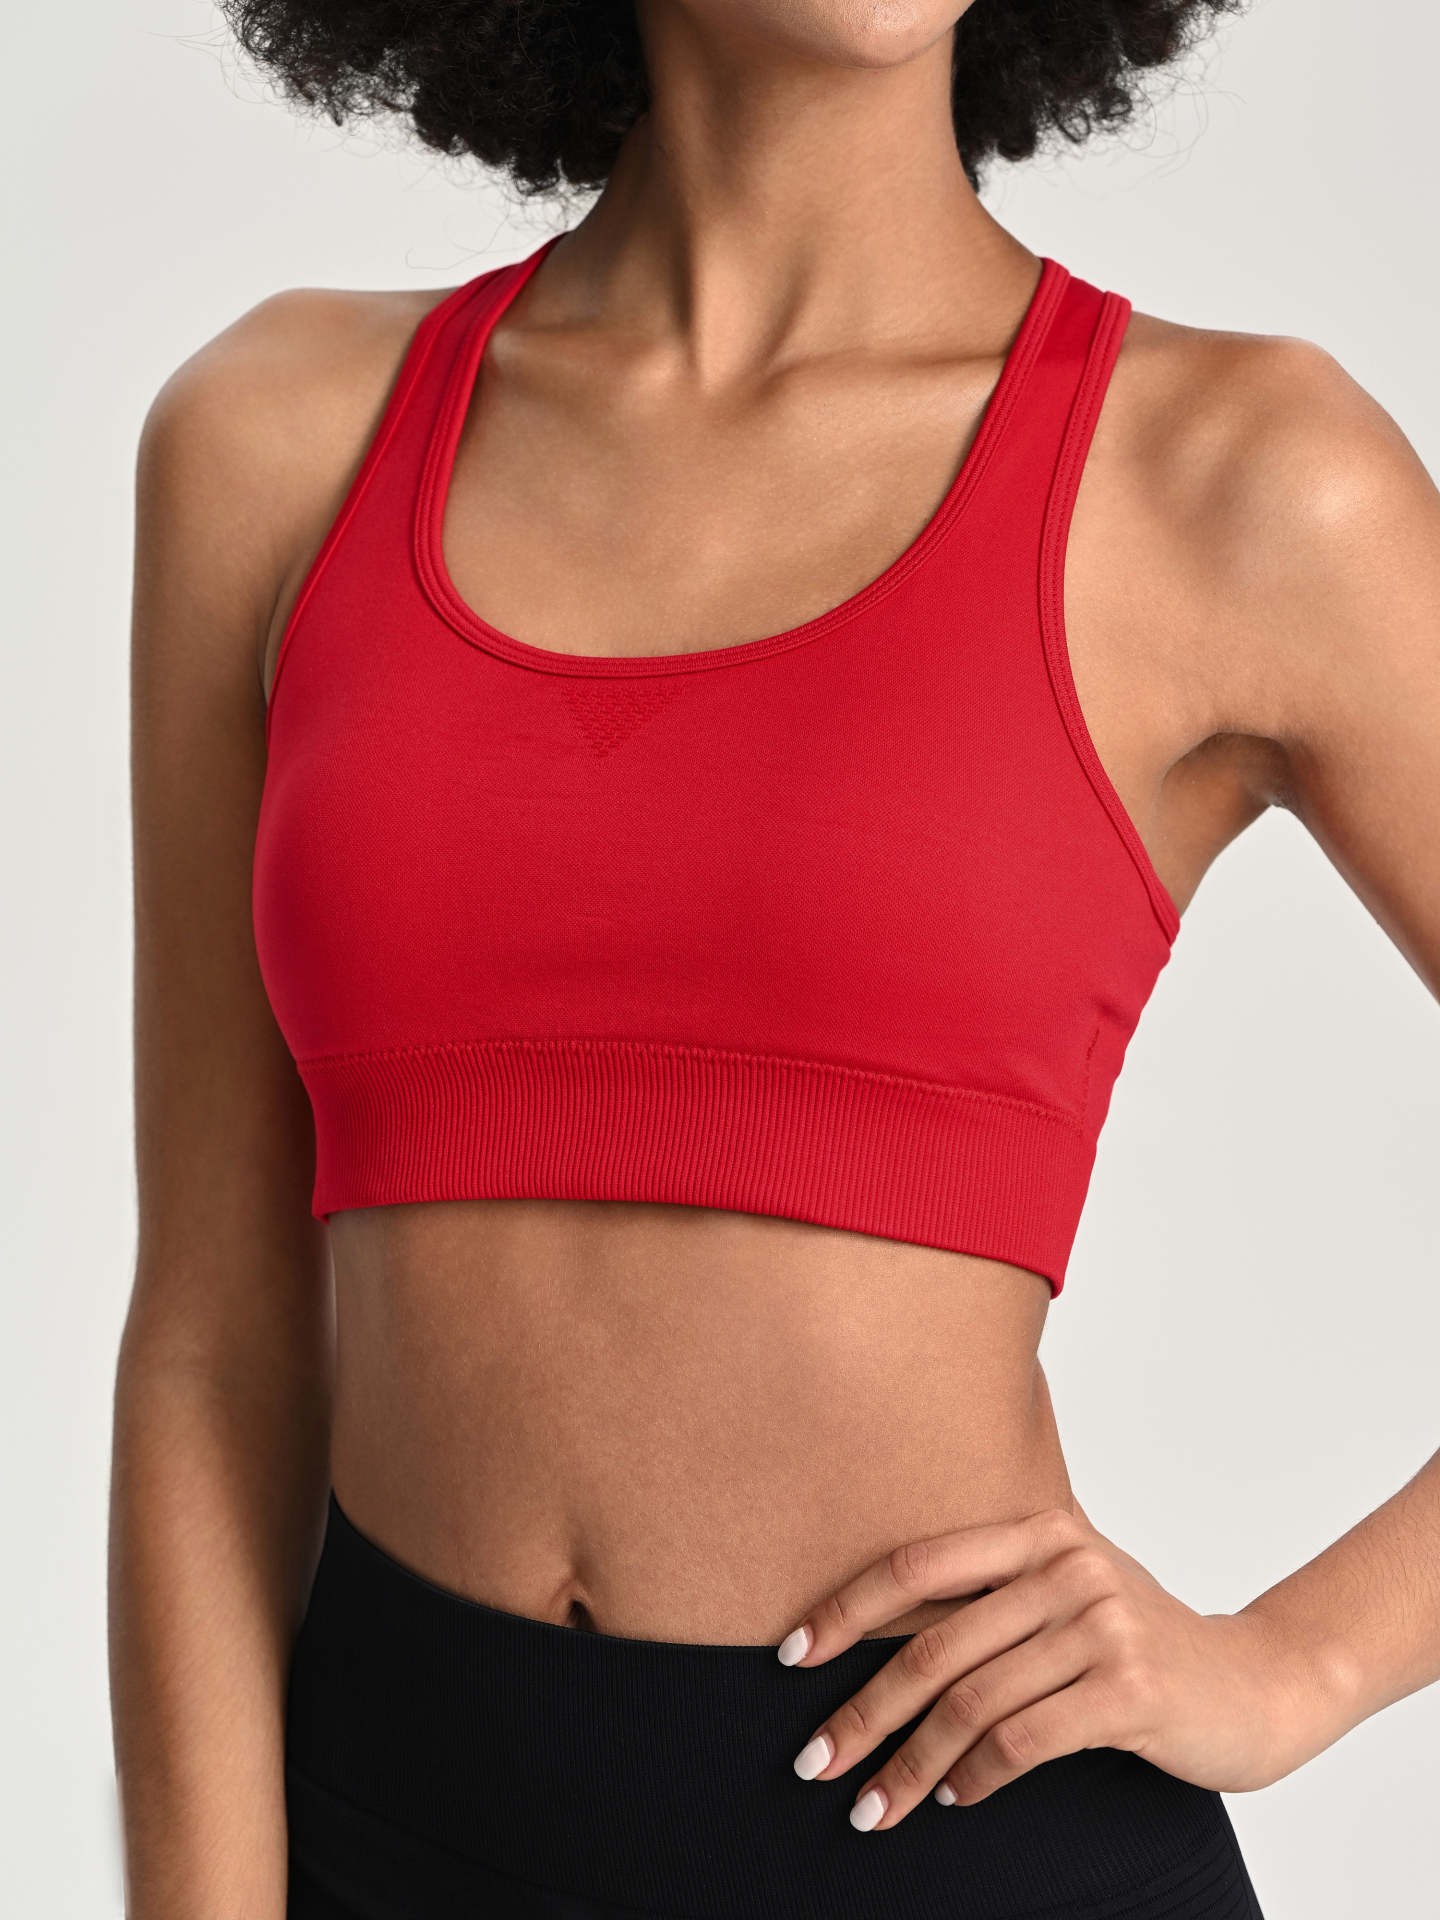 Sports bra from urbanic ₹340 🤍 Amazing quality 🫶 for link